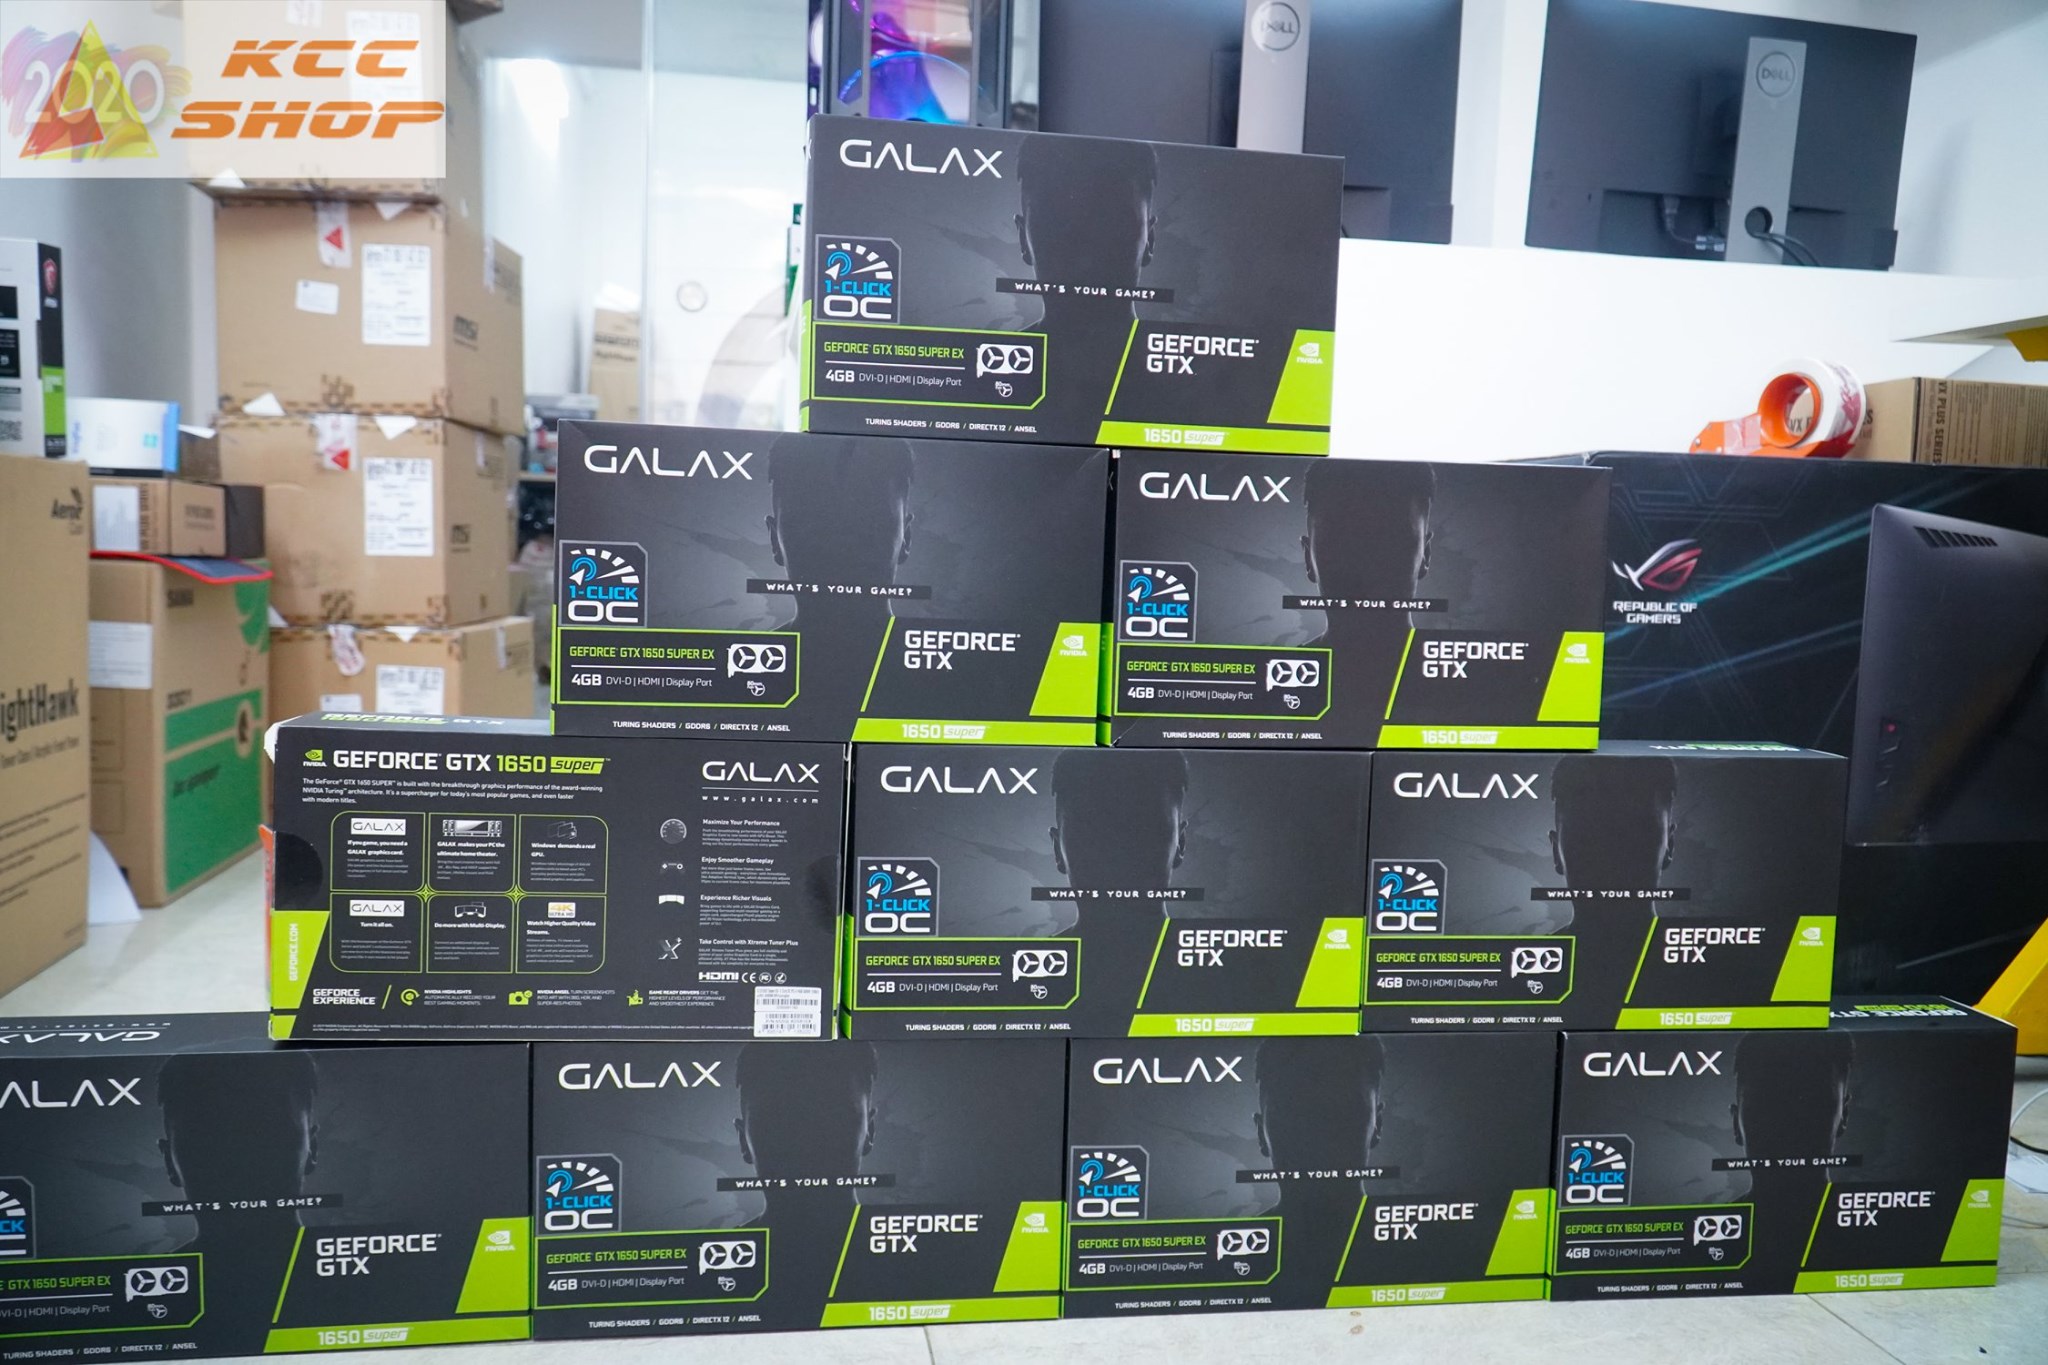 VGA GALAX GeForce GTX 1650 Super EX